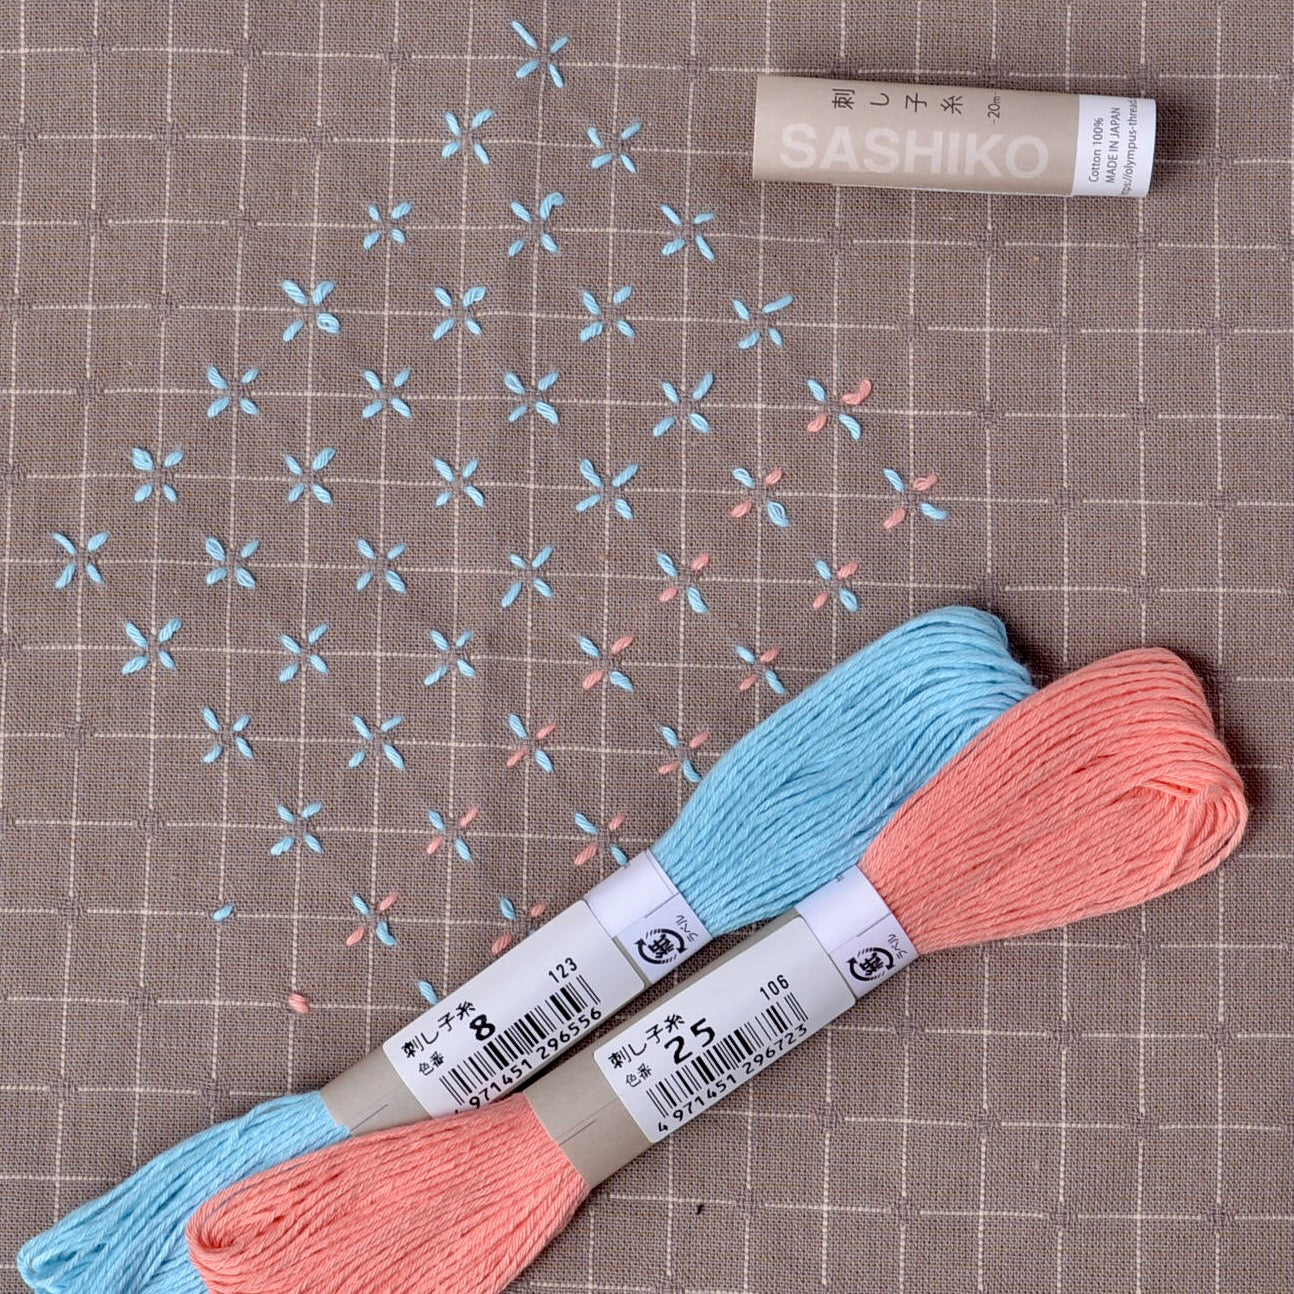 Olympus sashiko threads